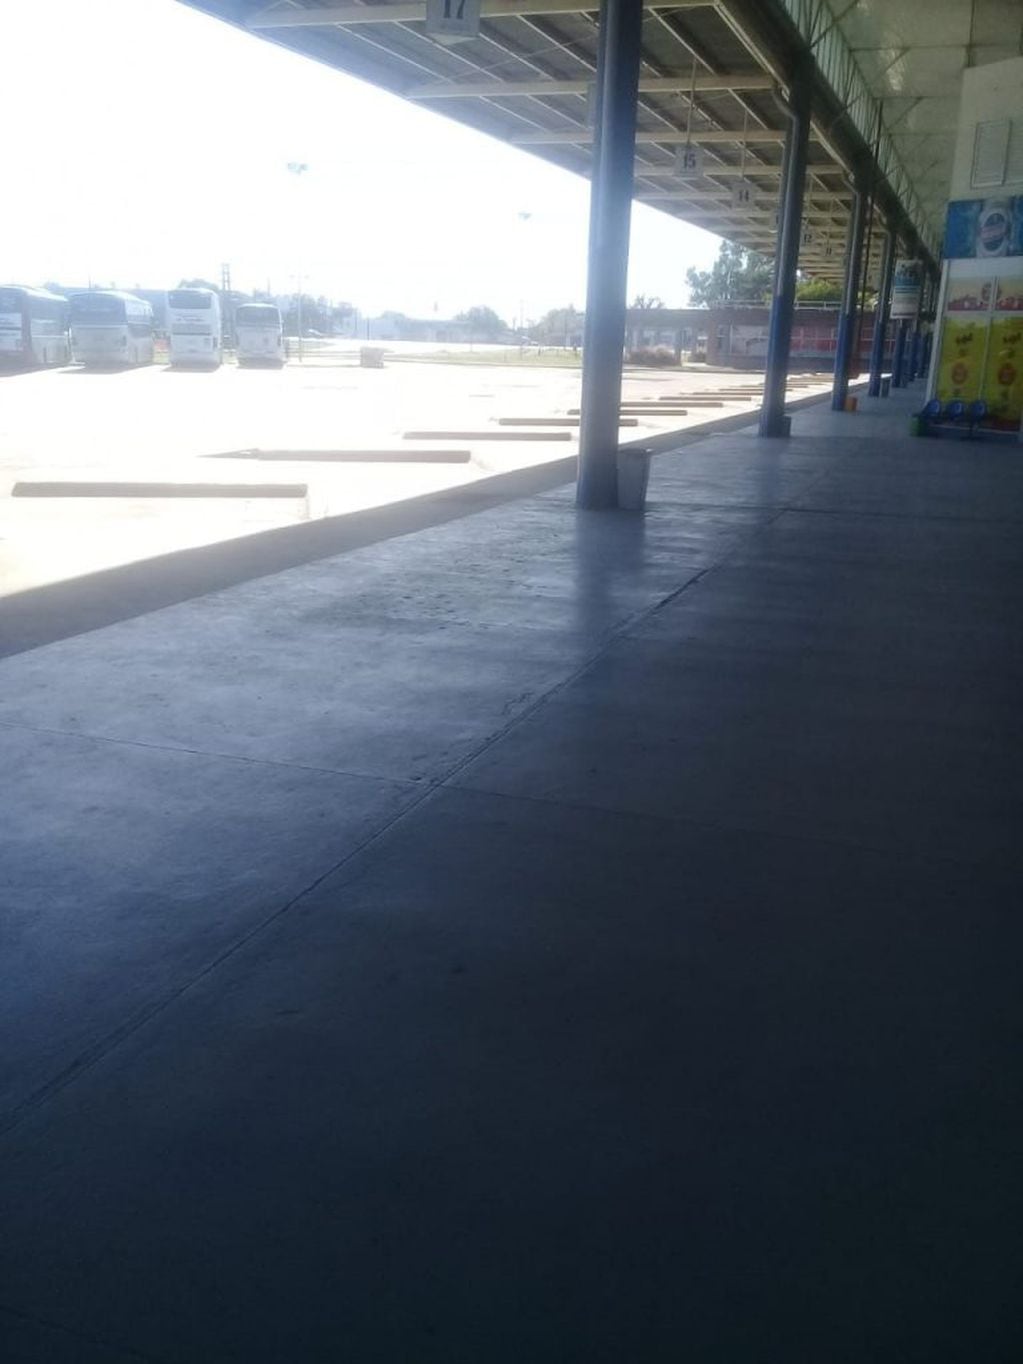 Terminal de Ómnibus de Rafaela sin colectivos esperando